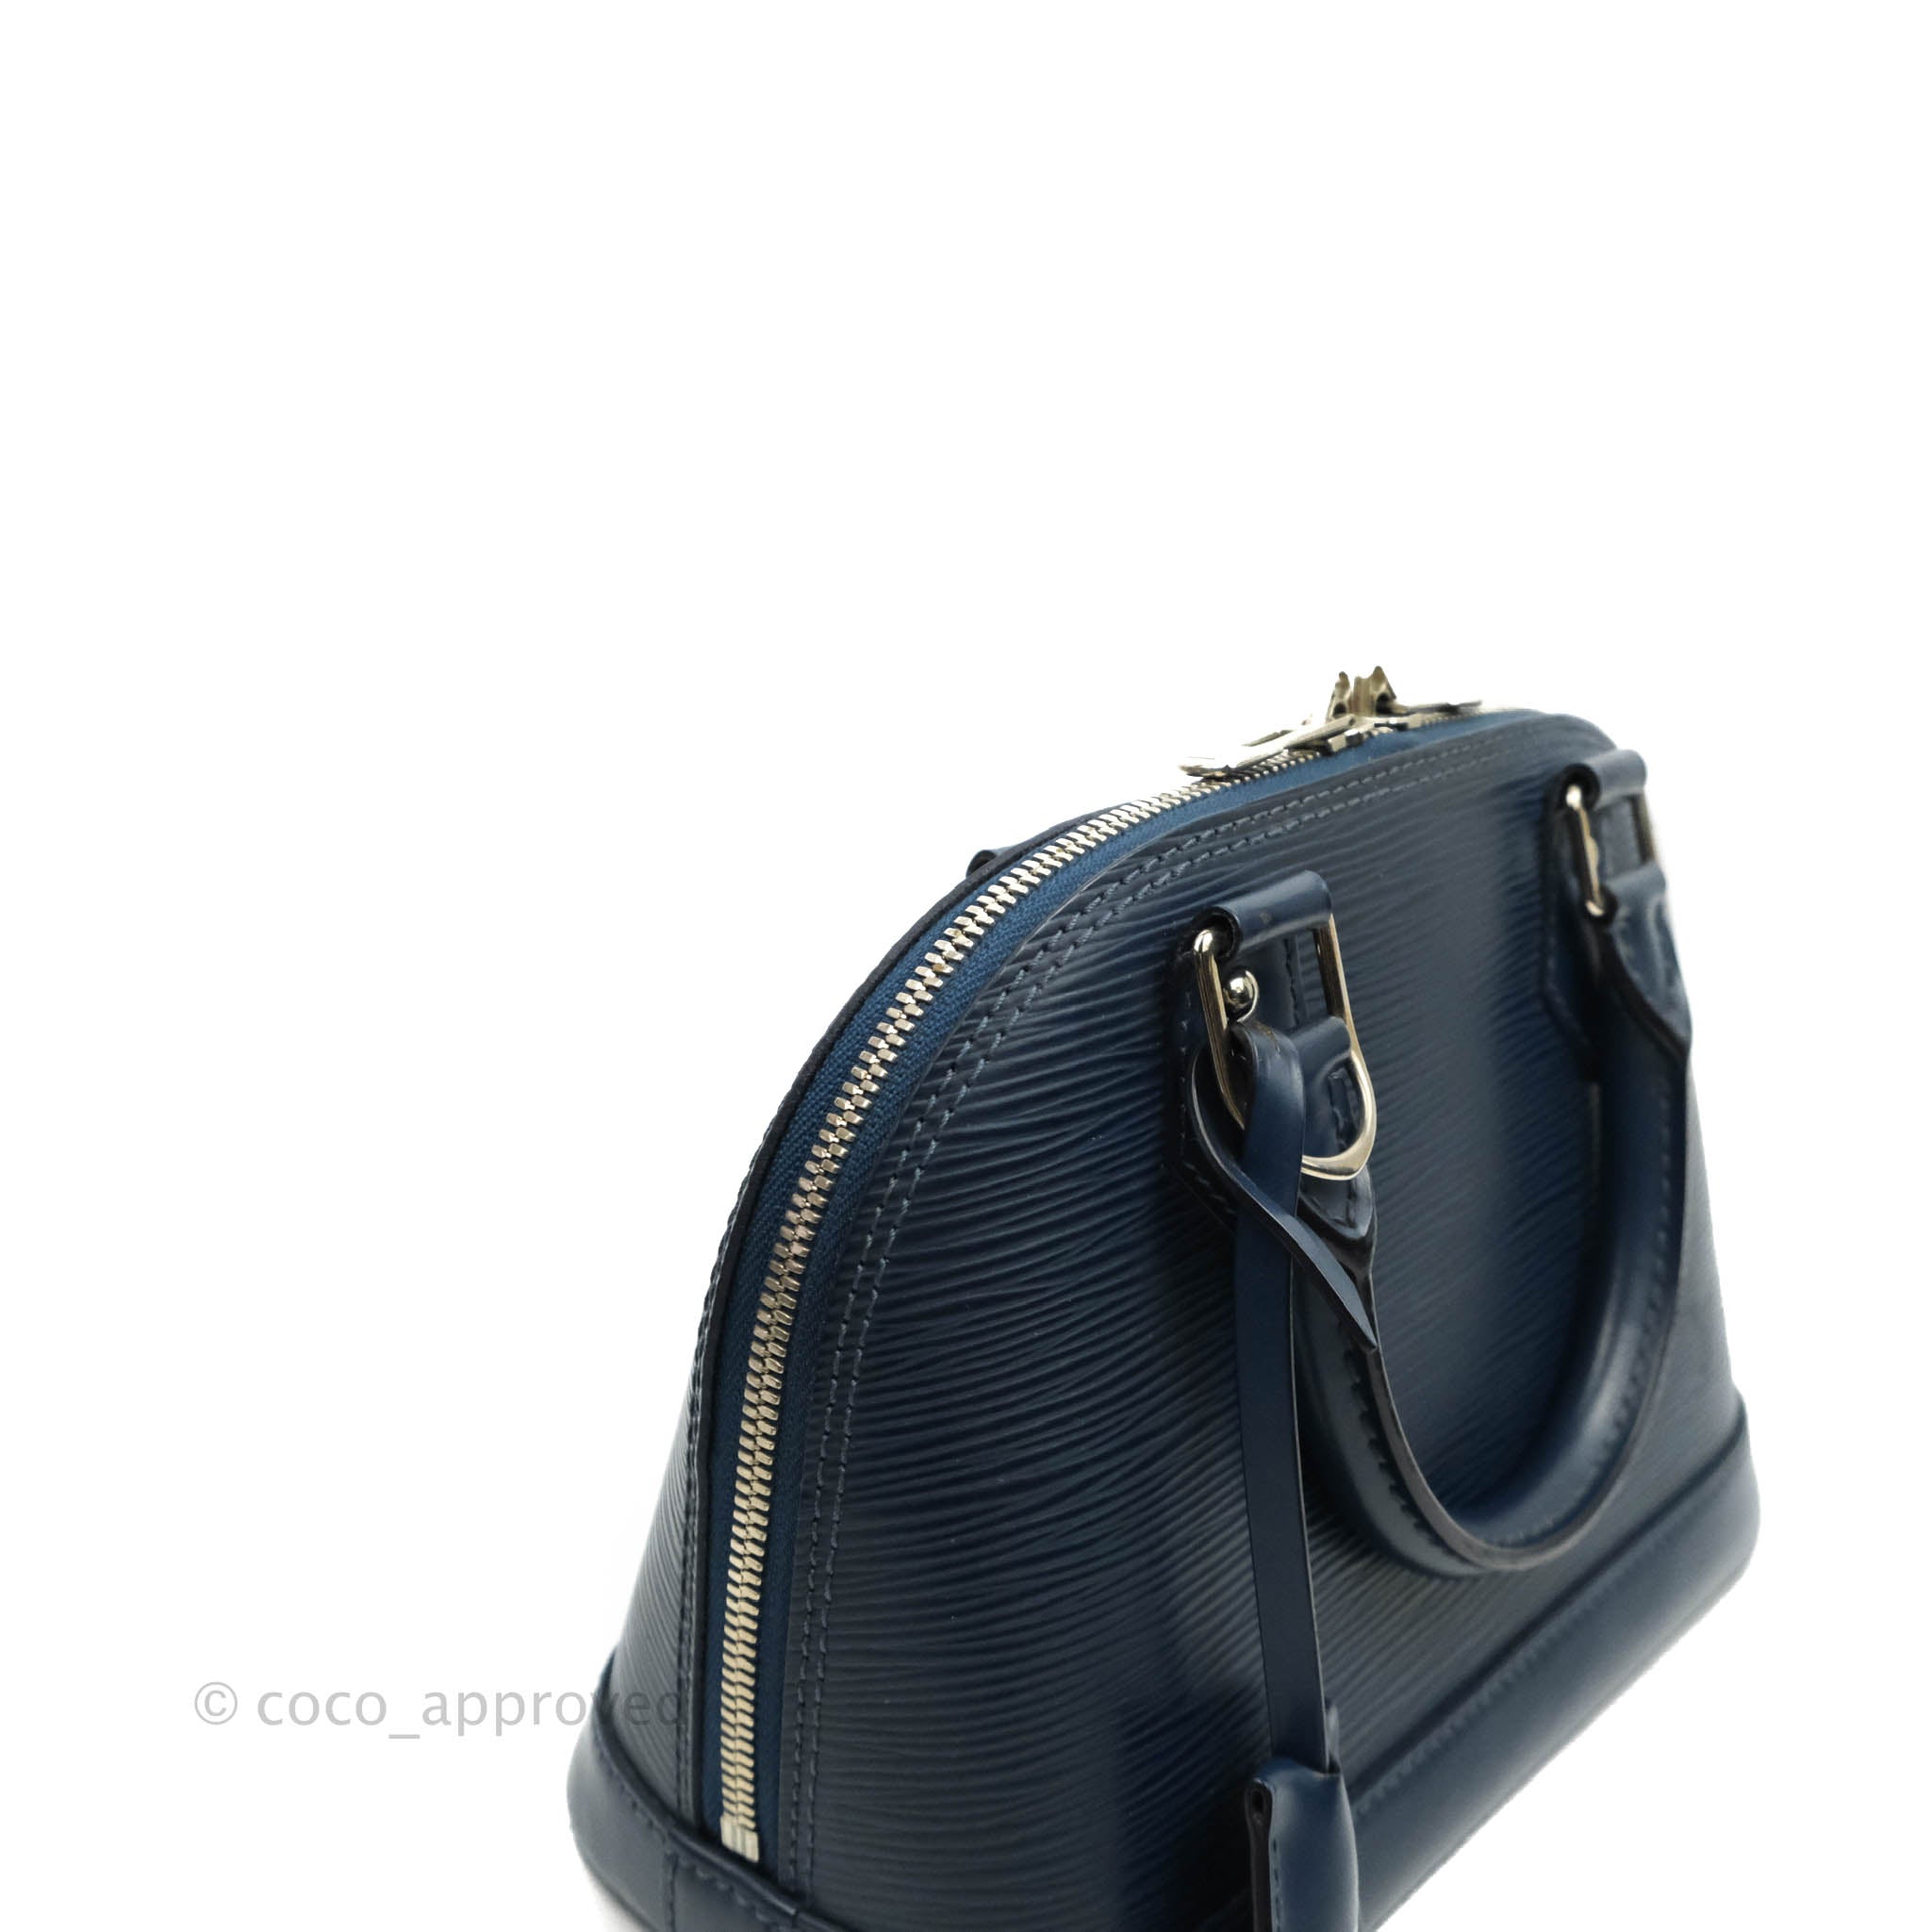 Louis Vuitton Alma PM comparison with 13 years old Coach Sierra bag 